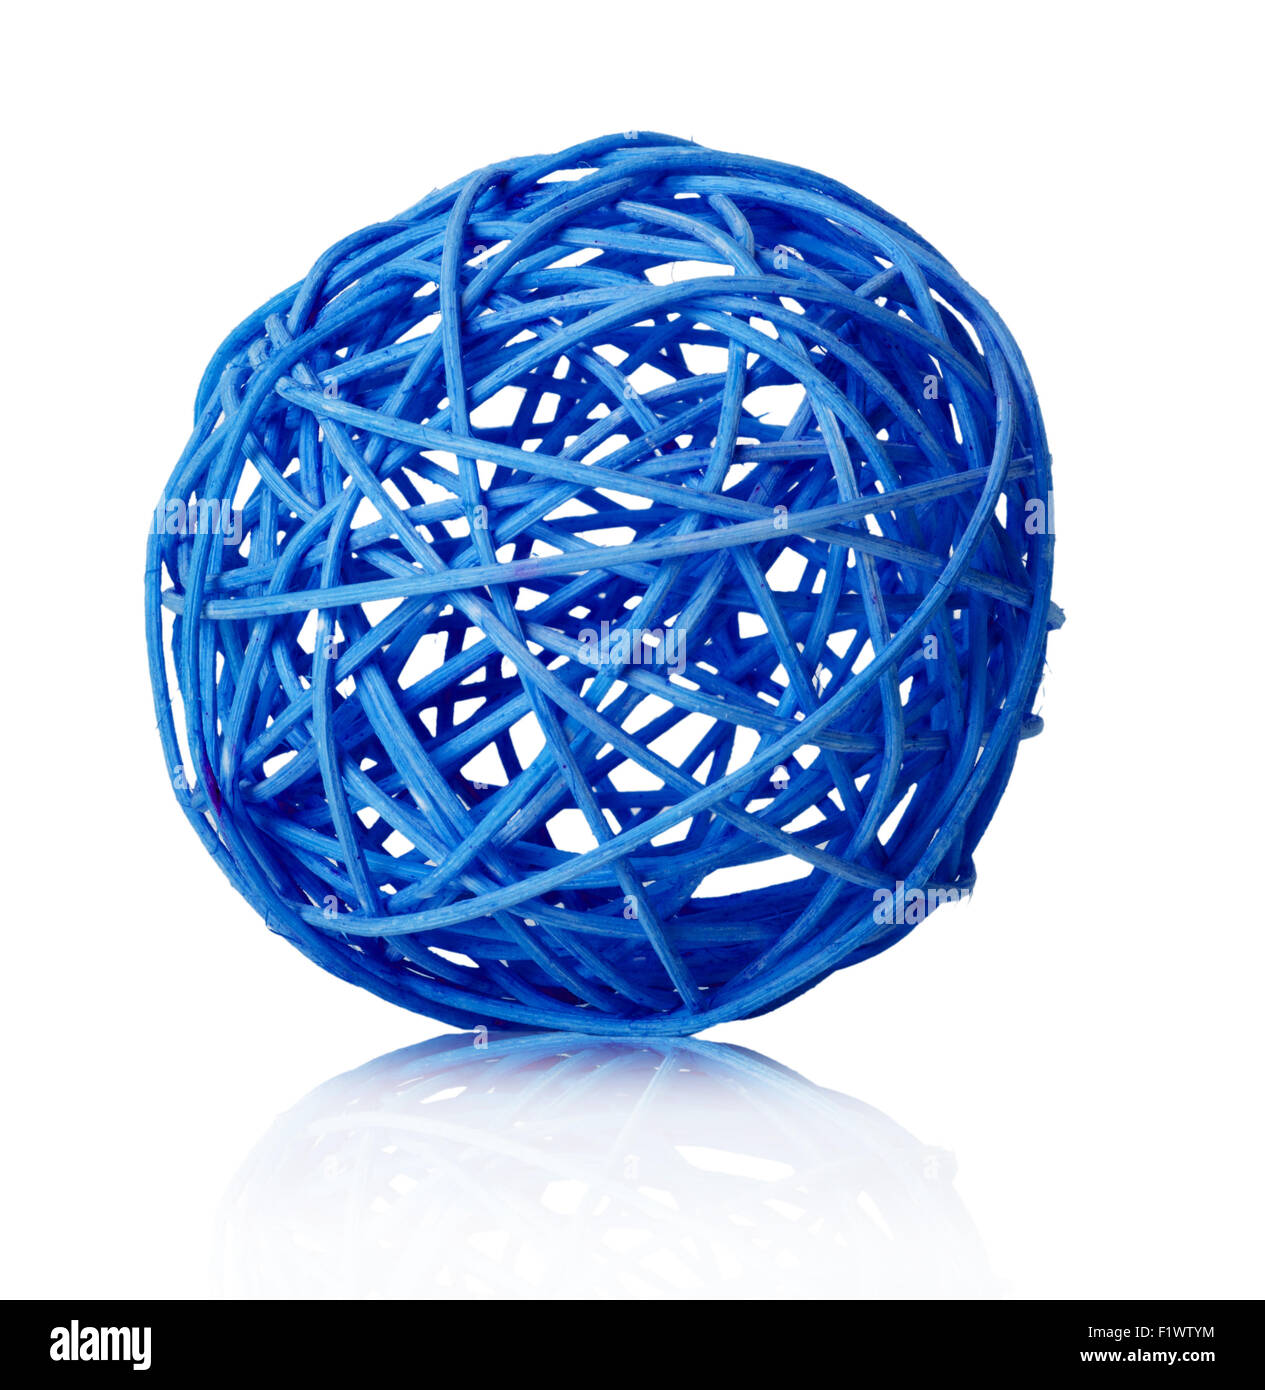 Bola de hilo azul sobre fondo blanco. Foto de stock